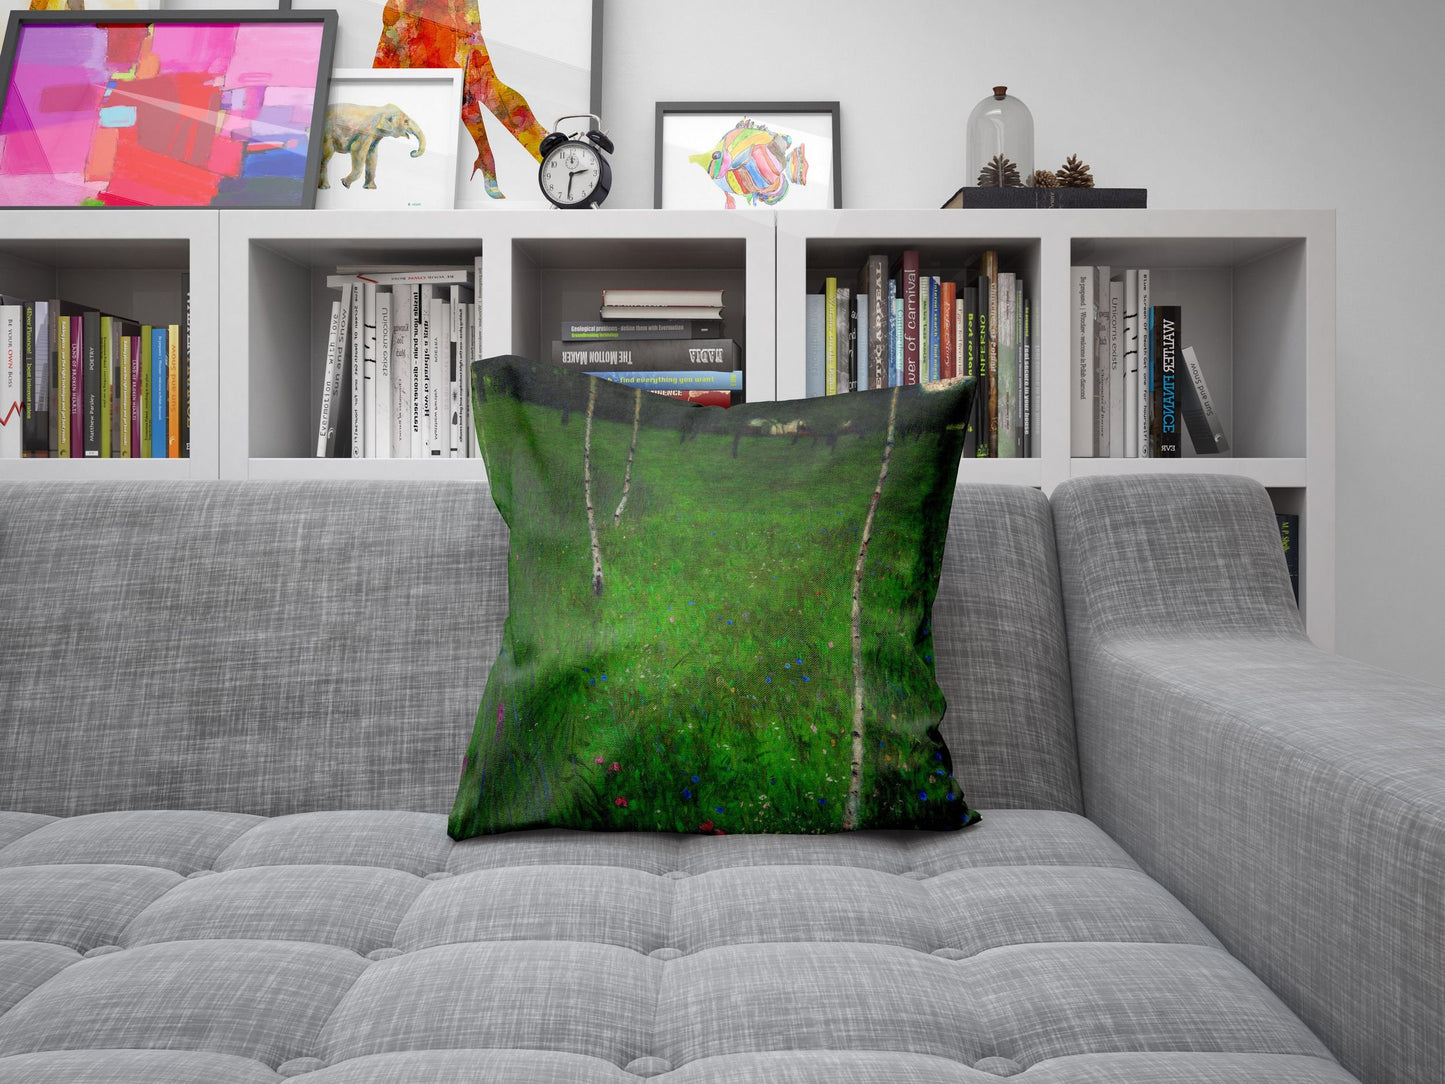 Abstract Throw Pillow, Gustav Klimt Famous Art, Throw Pillow Cover, Soft Pillow Cases, Green Pillow Cases, Art Nouveau Pillow, Square Pillow